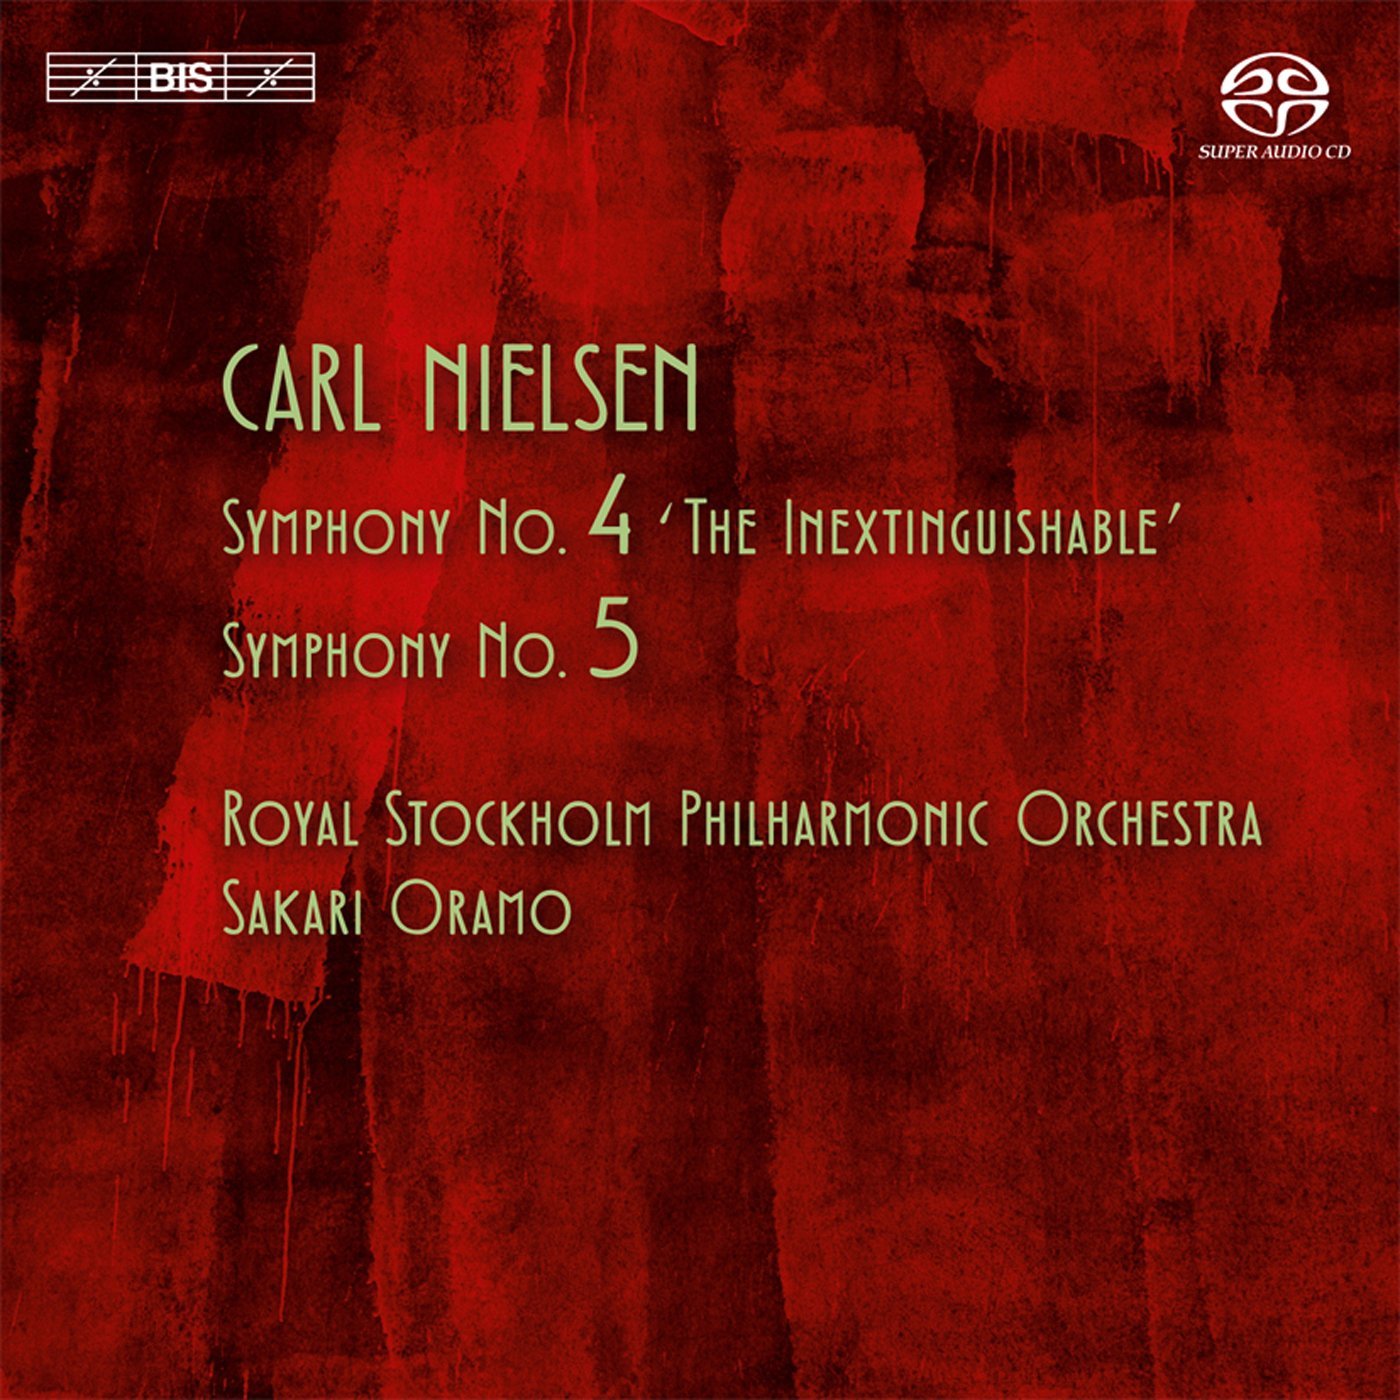 Oramo's Nielsen symphonies recording